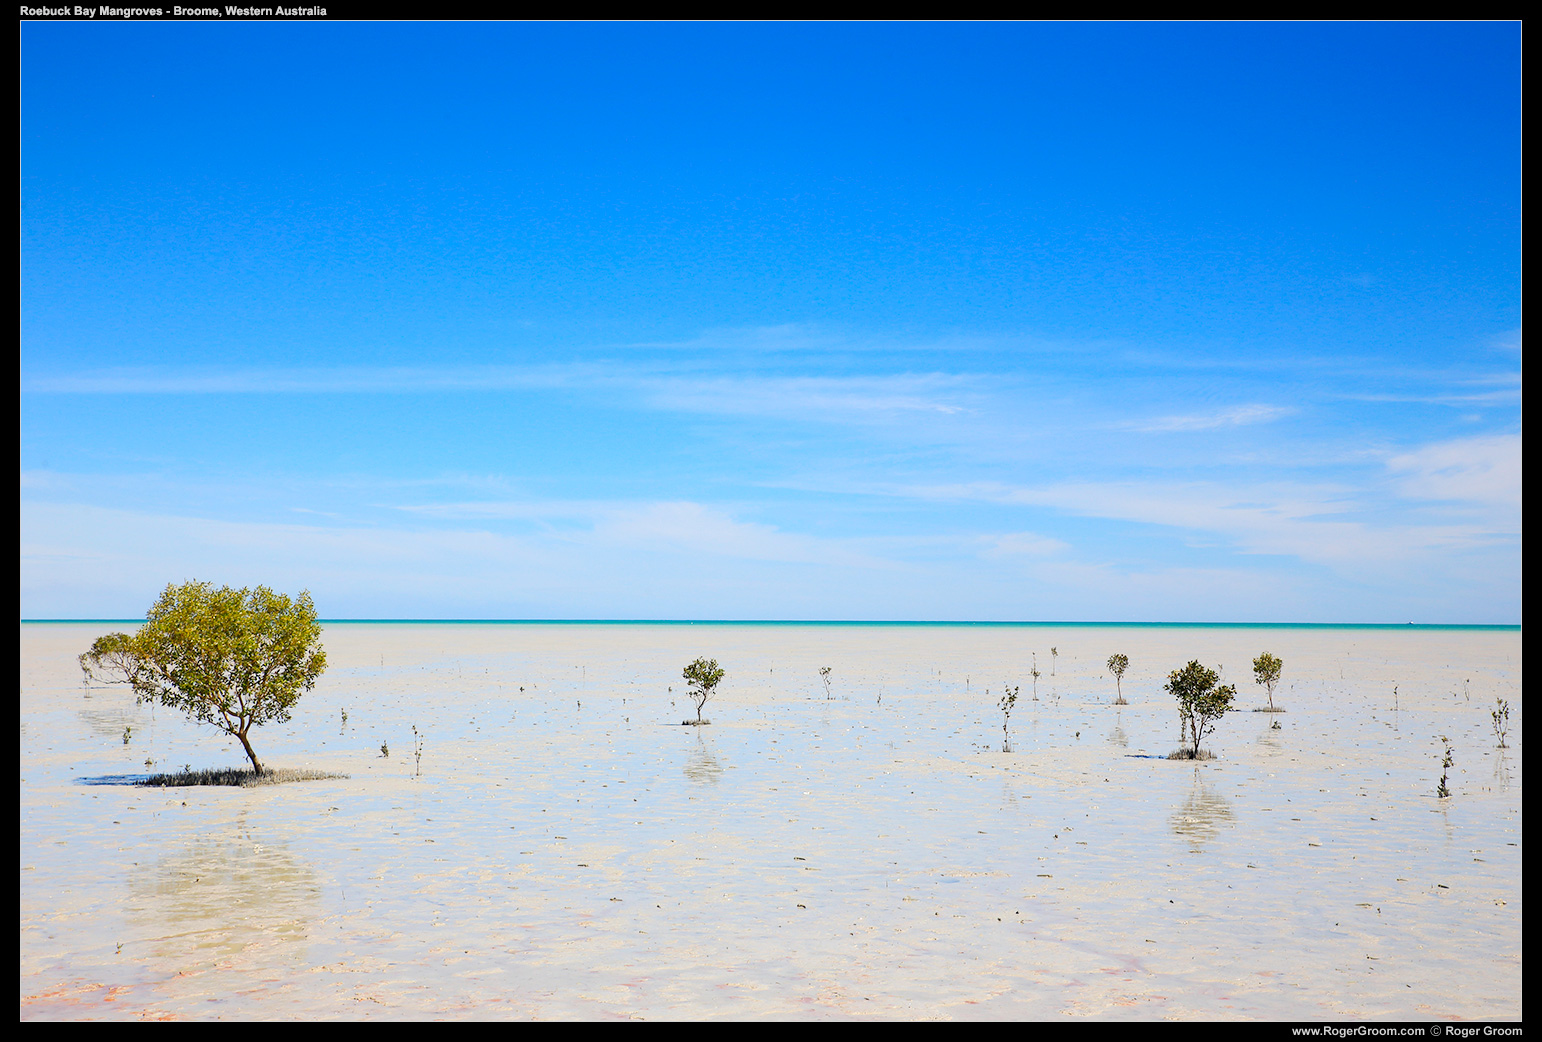 Roebuck Bay Mangroves under the clear blue sky of Broome, Western Australia